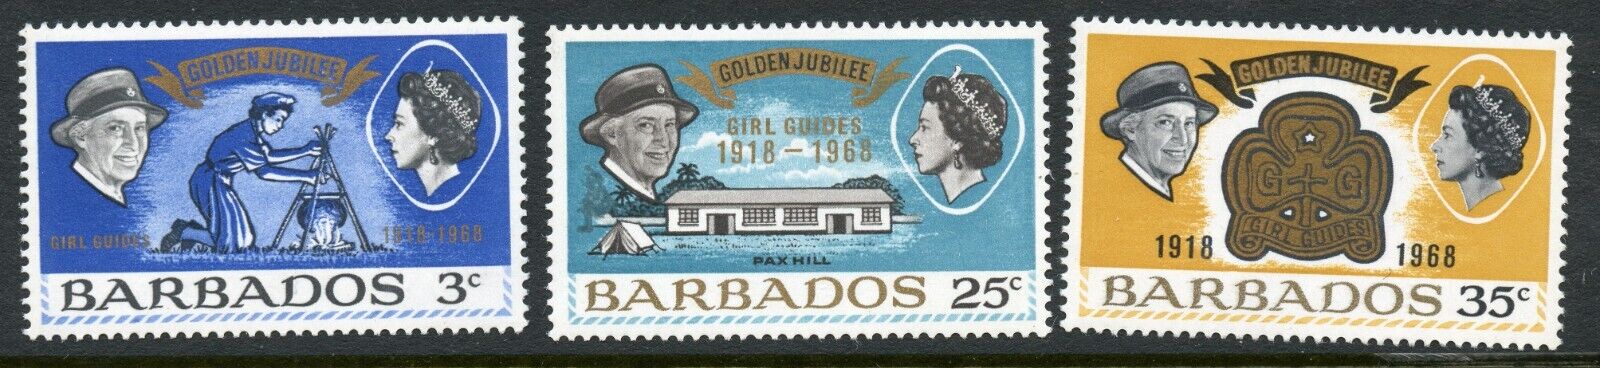 Barbados Scott 306-308 Barbados Girl Scouts’ 50th Anniv Mnh 1968